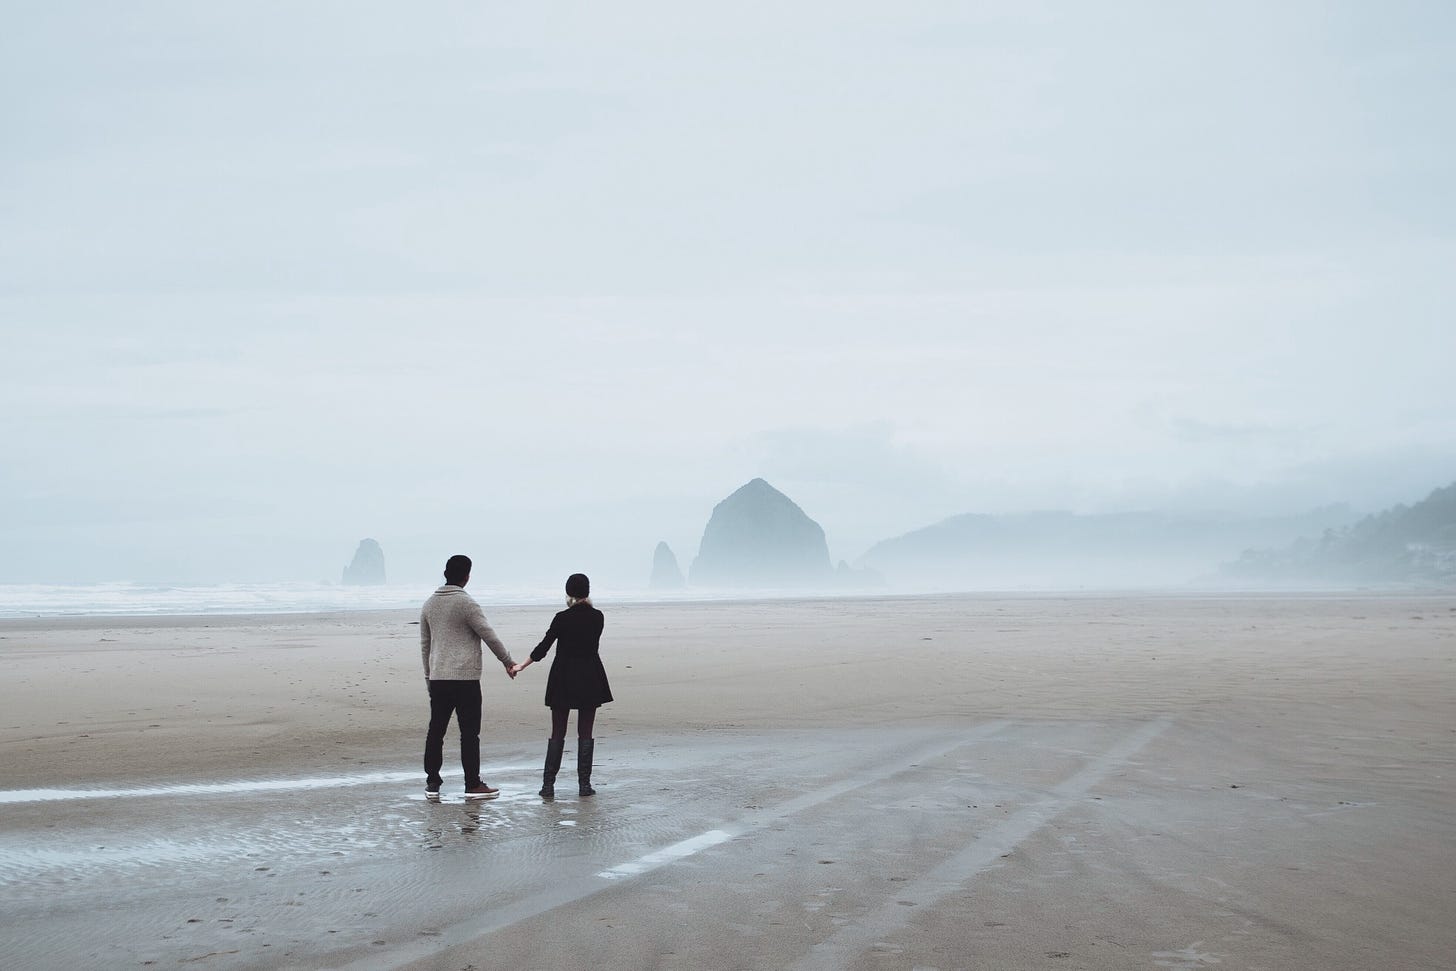 A couple walks alone on a deserted beach in heavy fog.